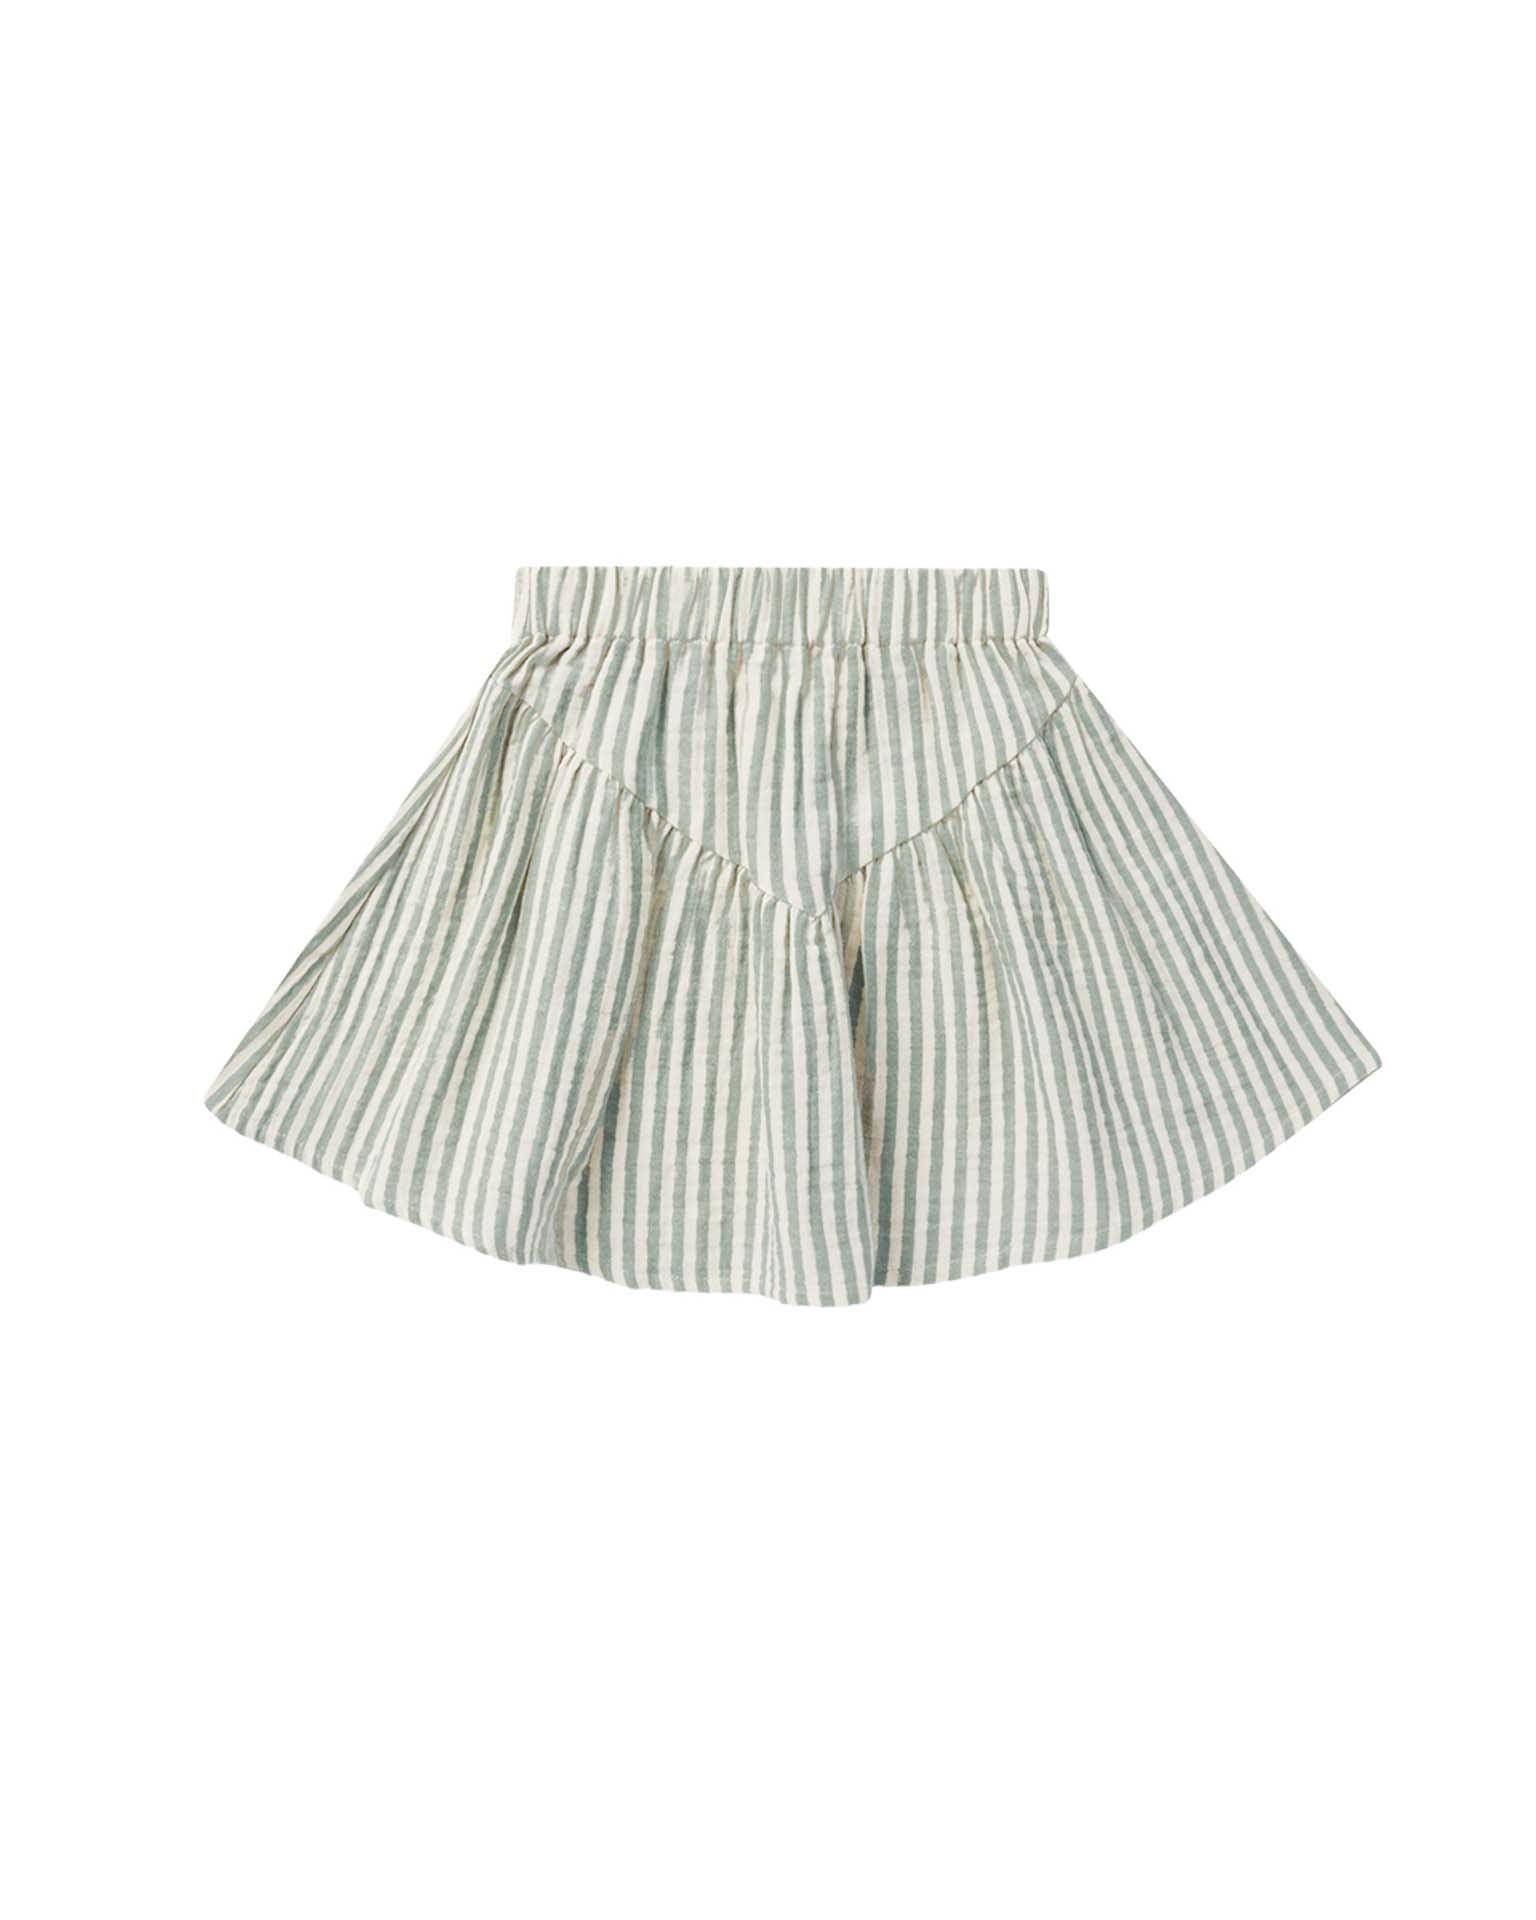 Little rylee + cru kids sparrow skirt in summer stripe